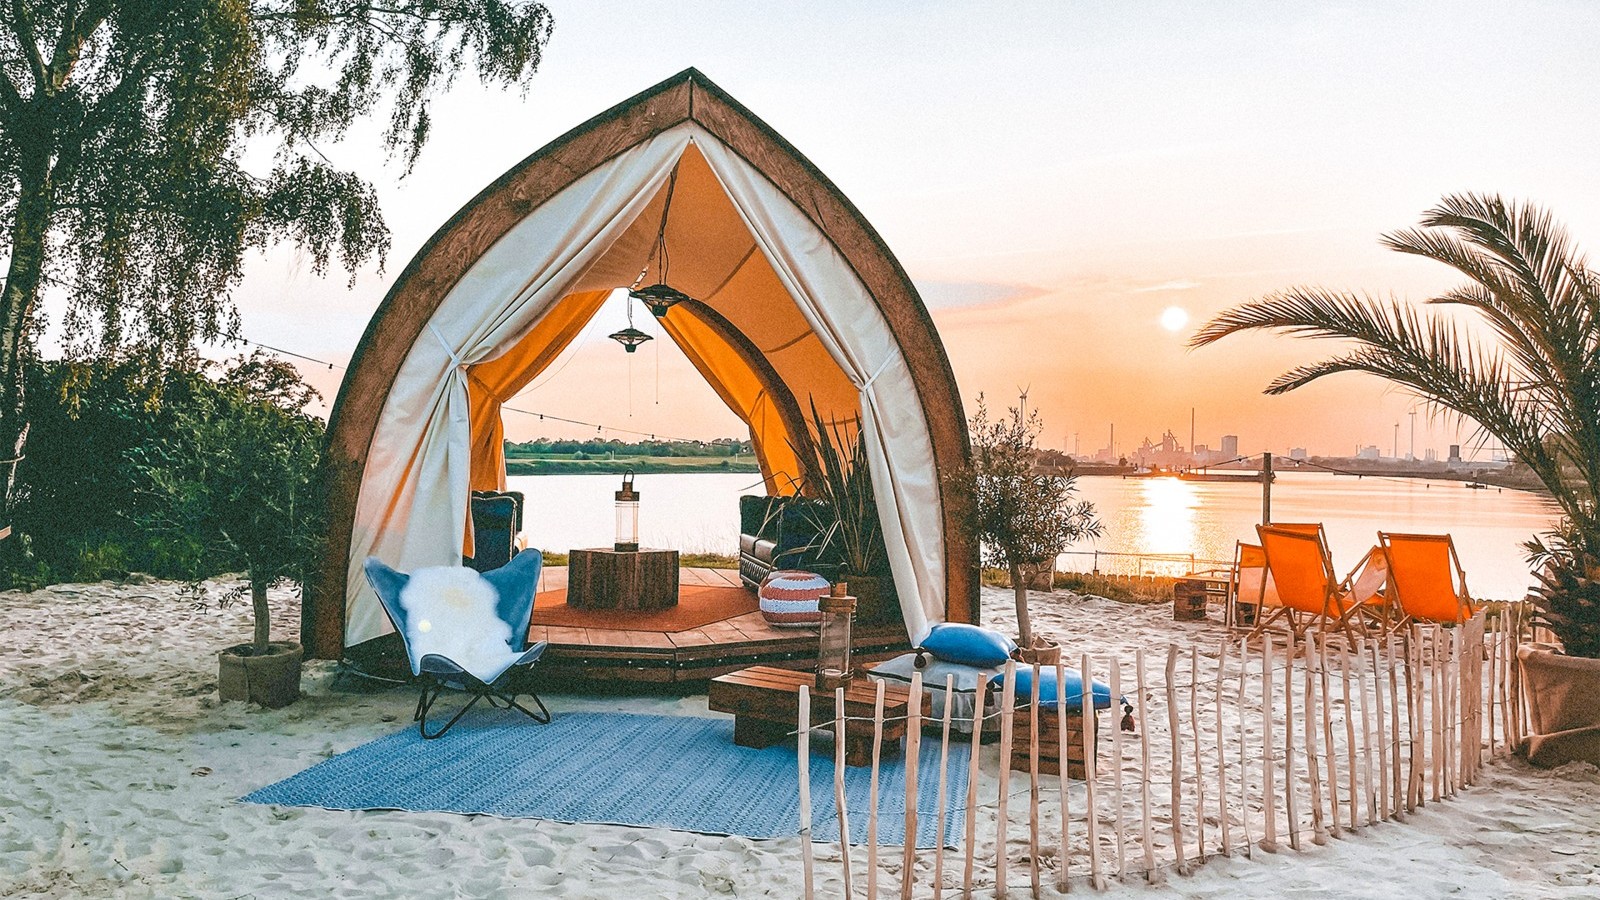 Luxury glamping lounge on the beach as beach bar